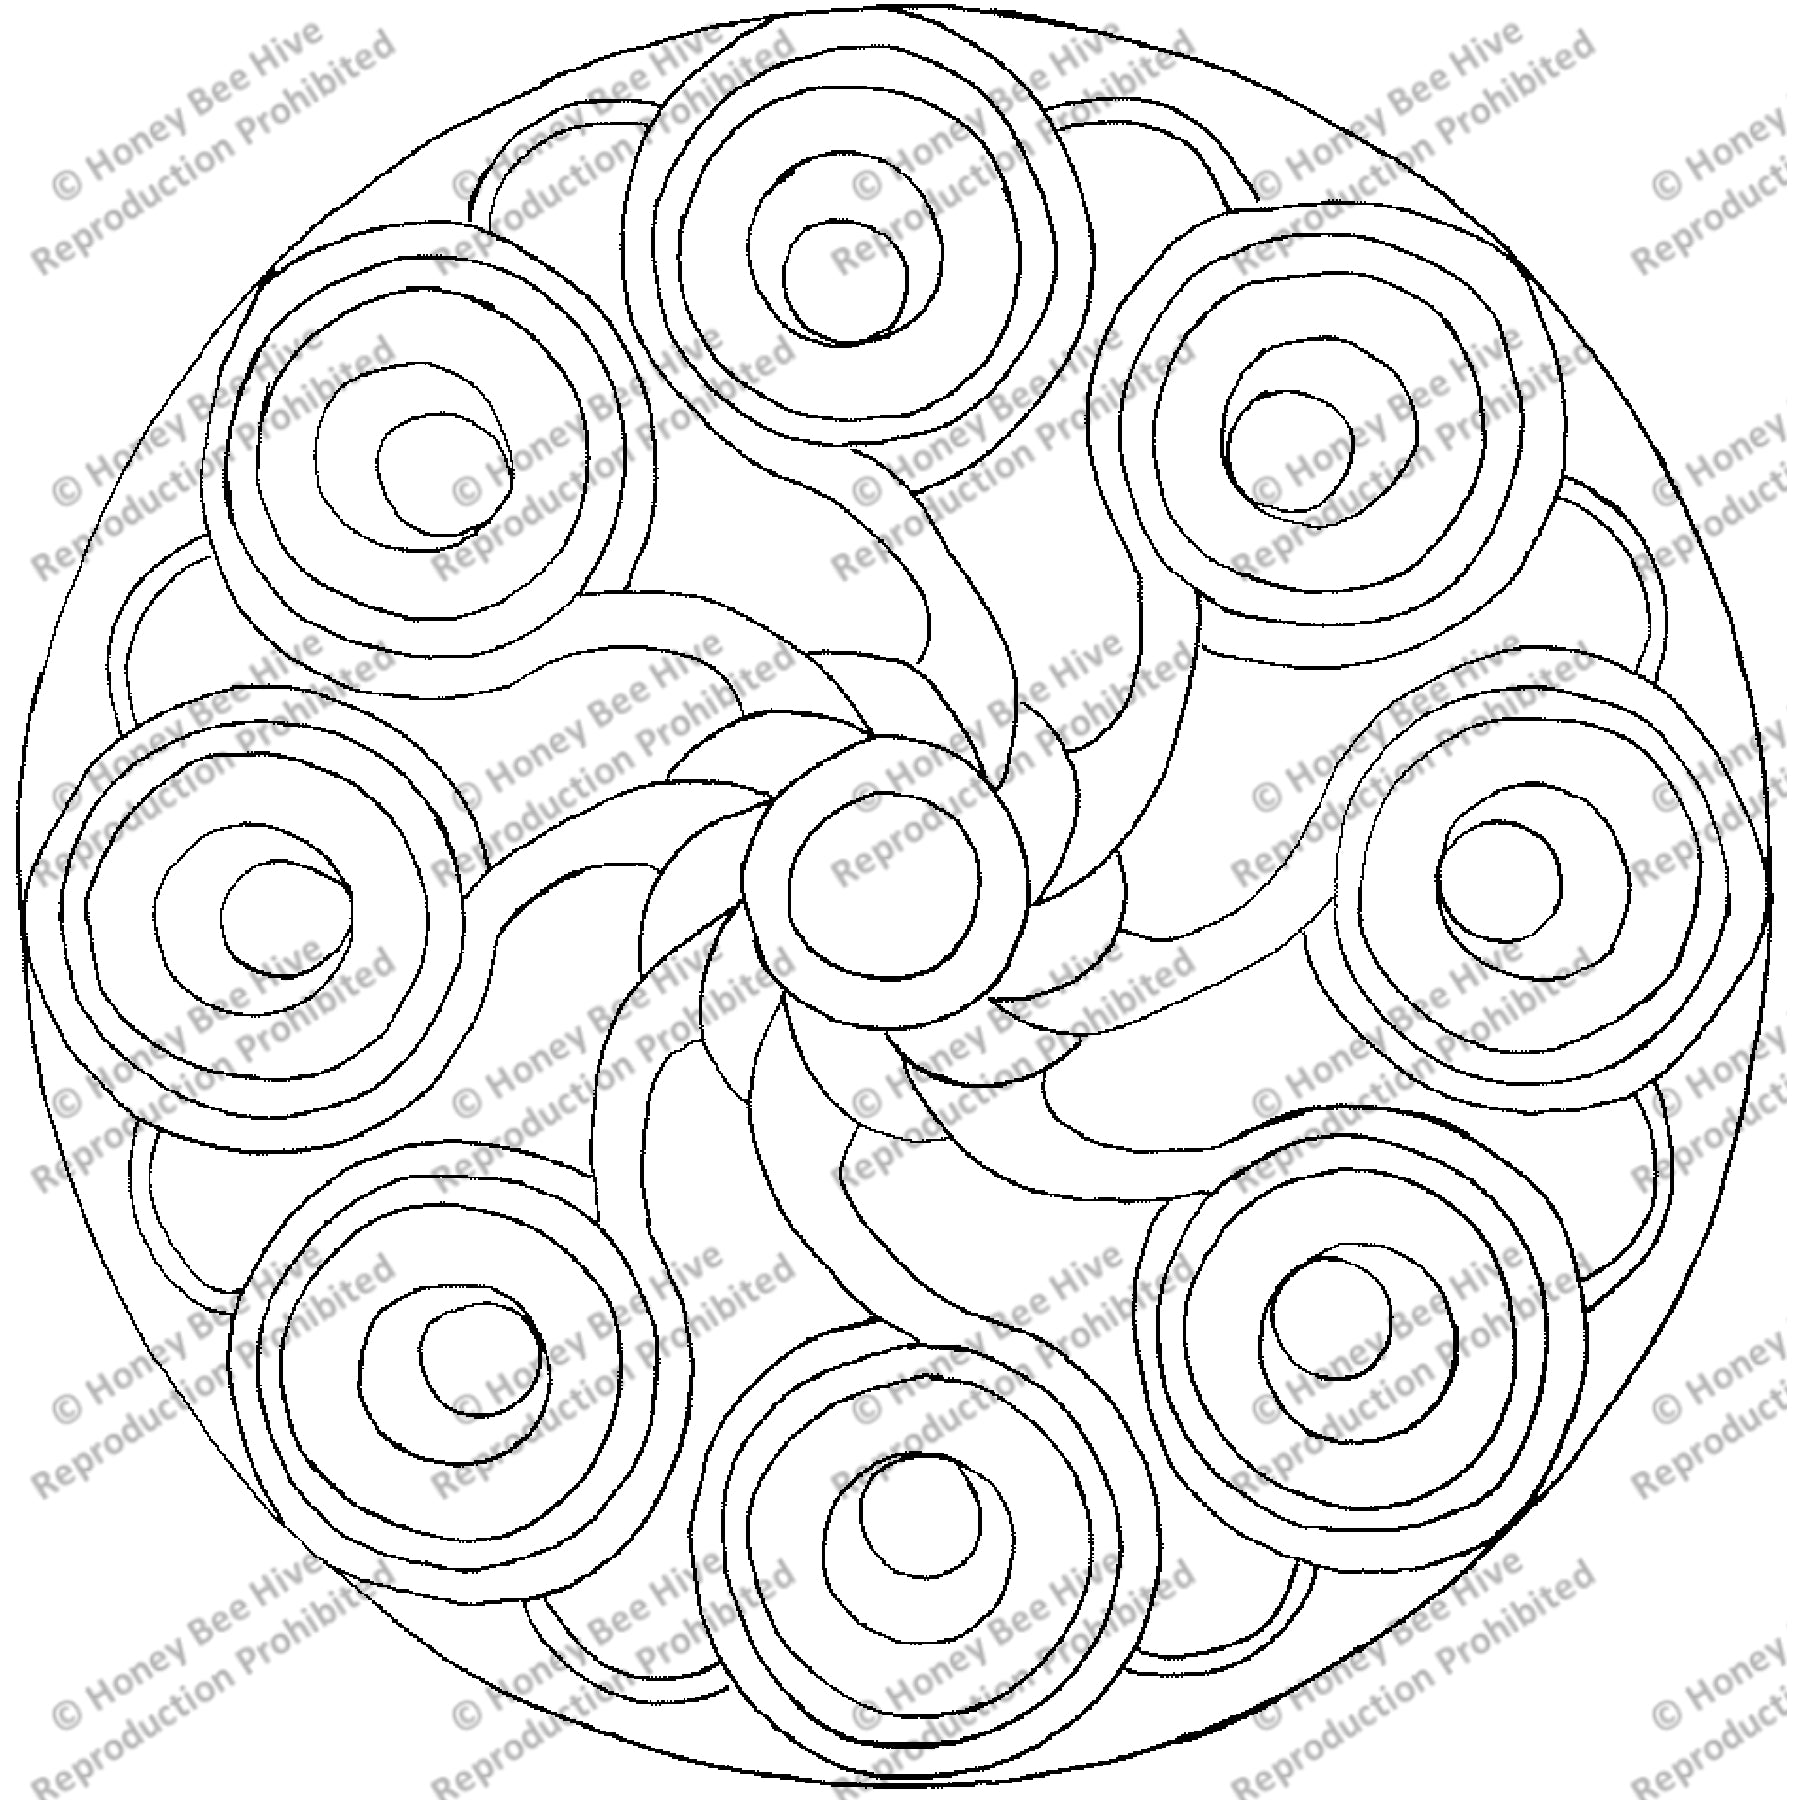 Circles Within Circles, rug hooking pattern